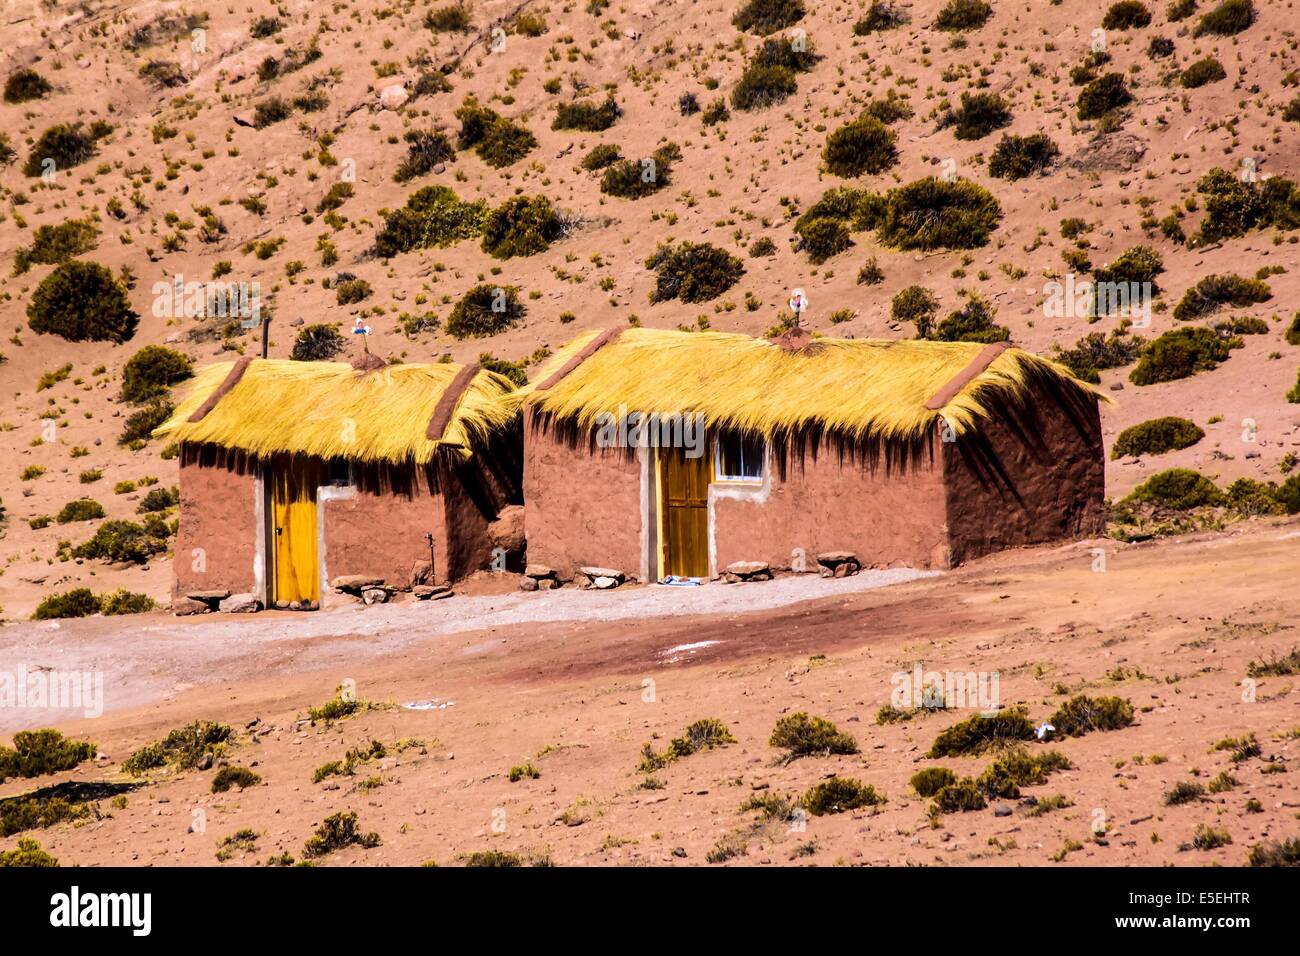 Houses in Machuca, Atacama desert, Chile and Bolivia Stock Photo - Alamy